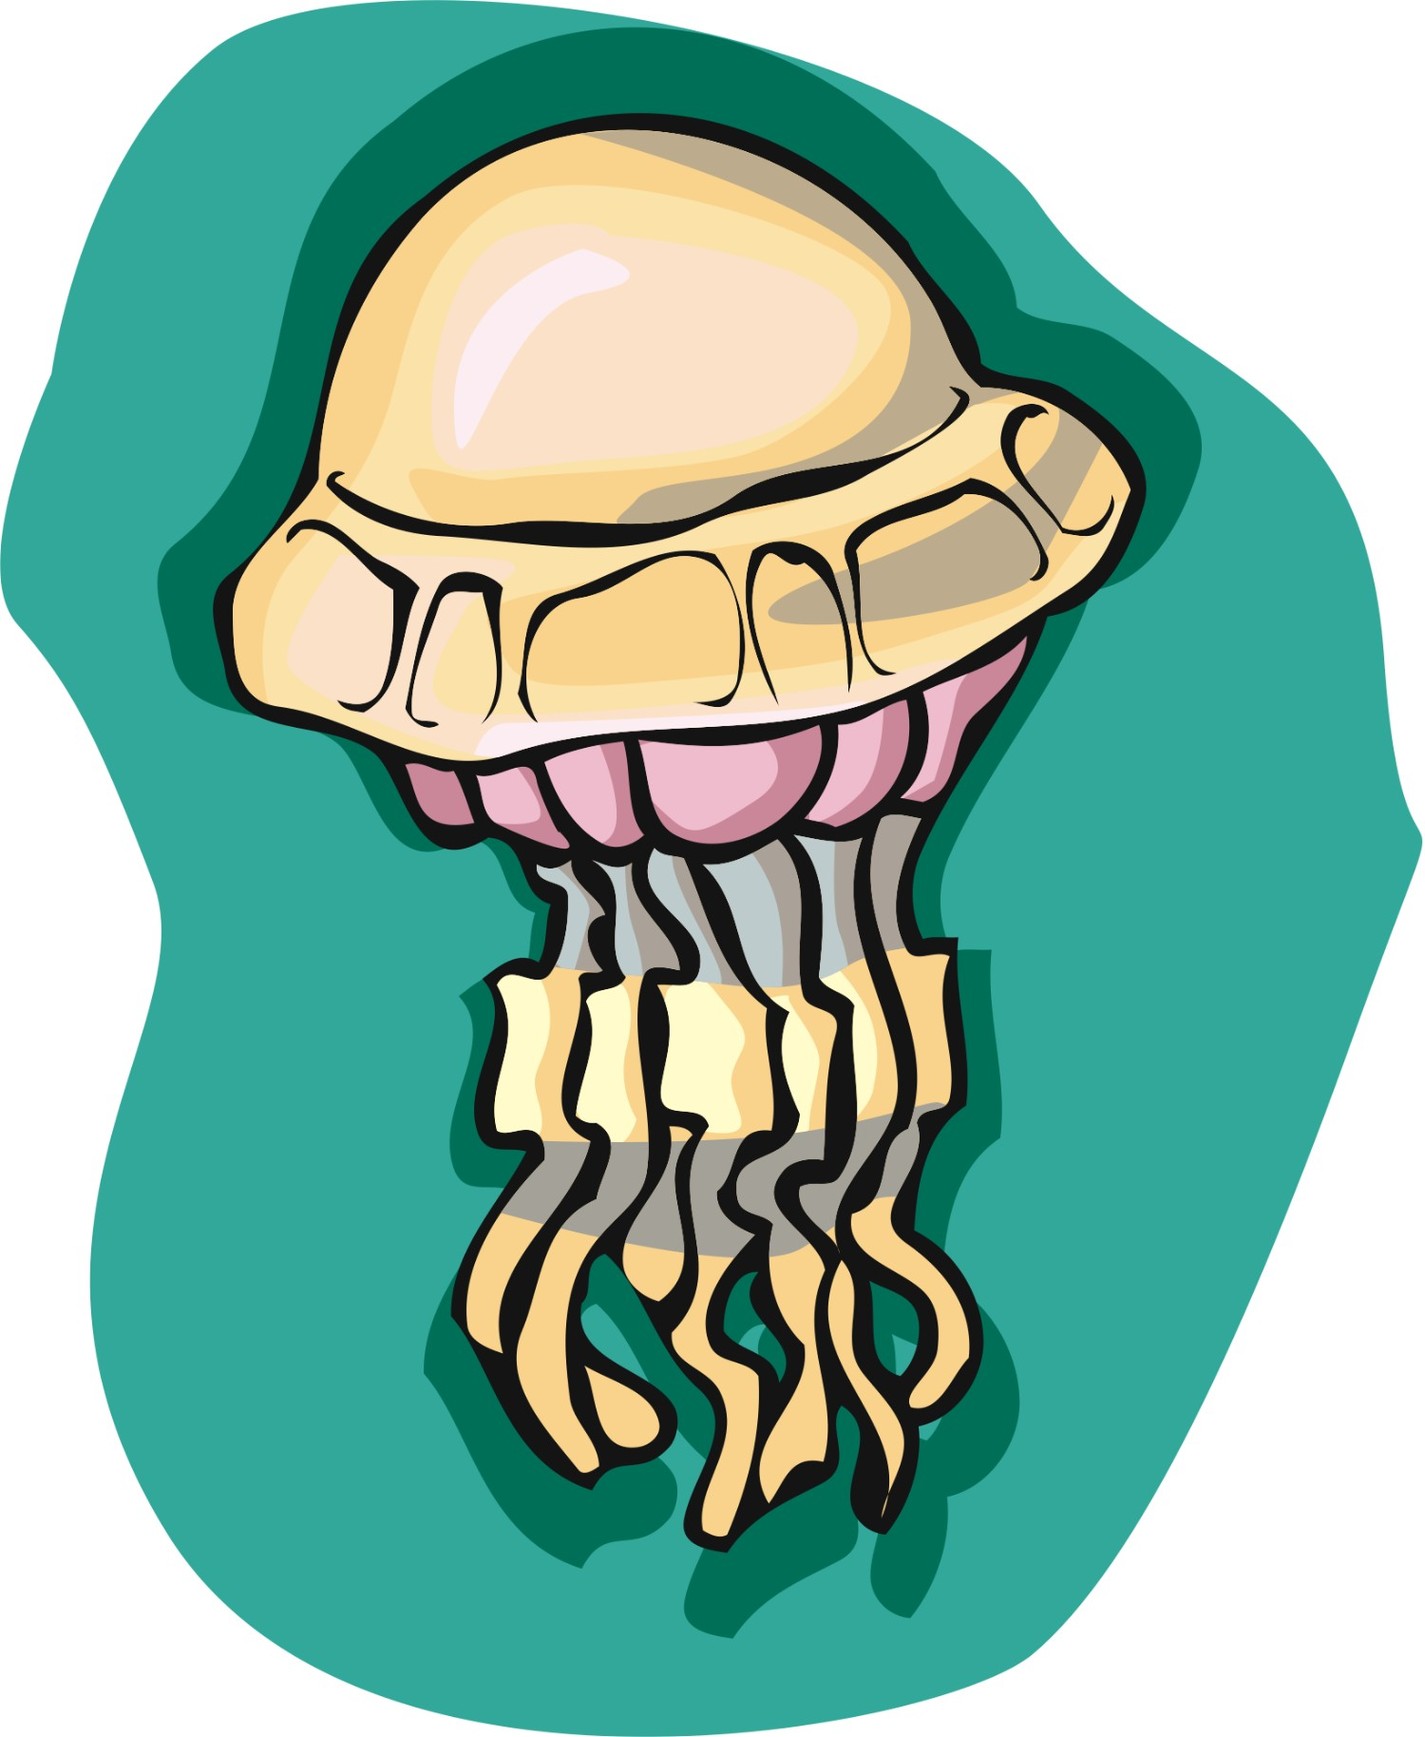 Medusa Clip Art Gif Gifs Animados 246958 Clipart - Free to use ...